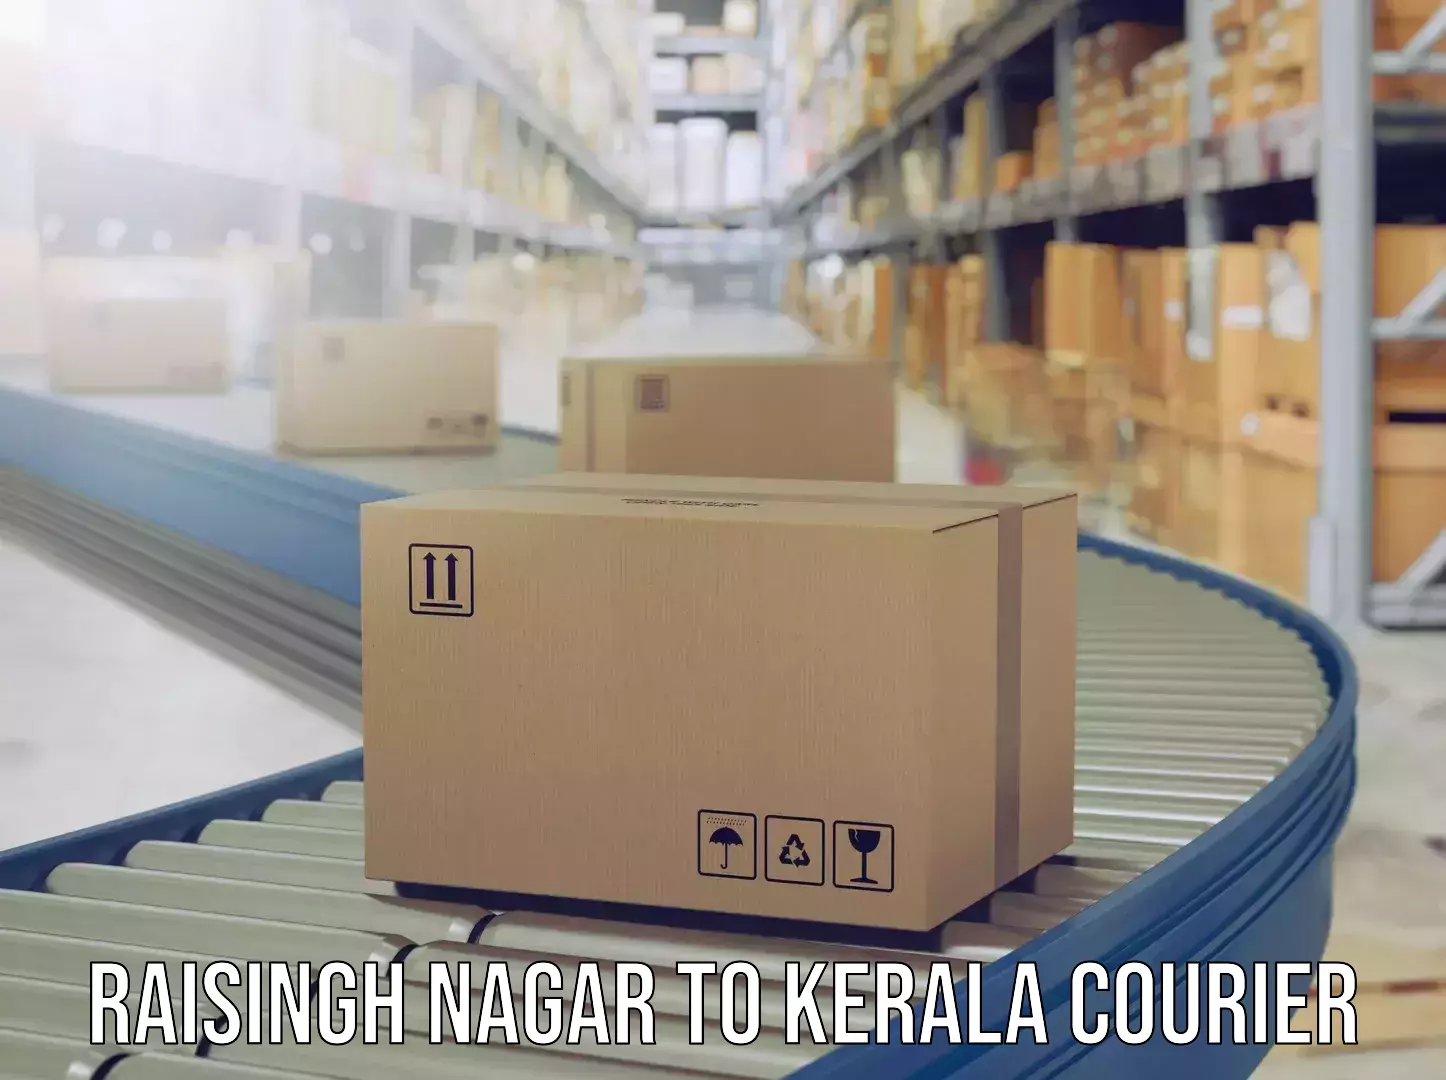 Luggage delivery network Raisingh Nagar to Kerala